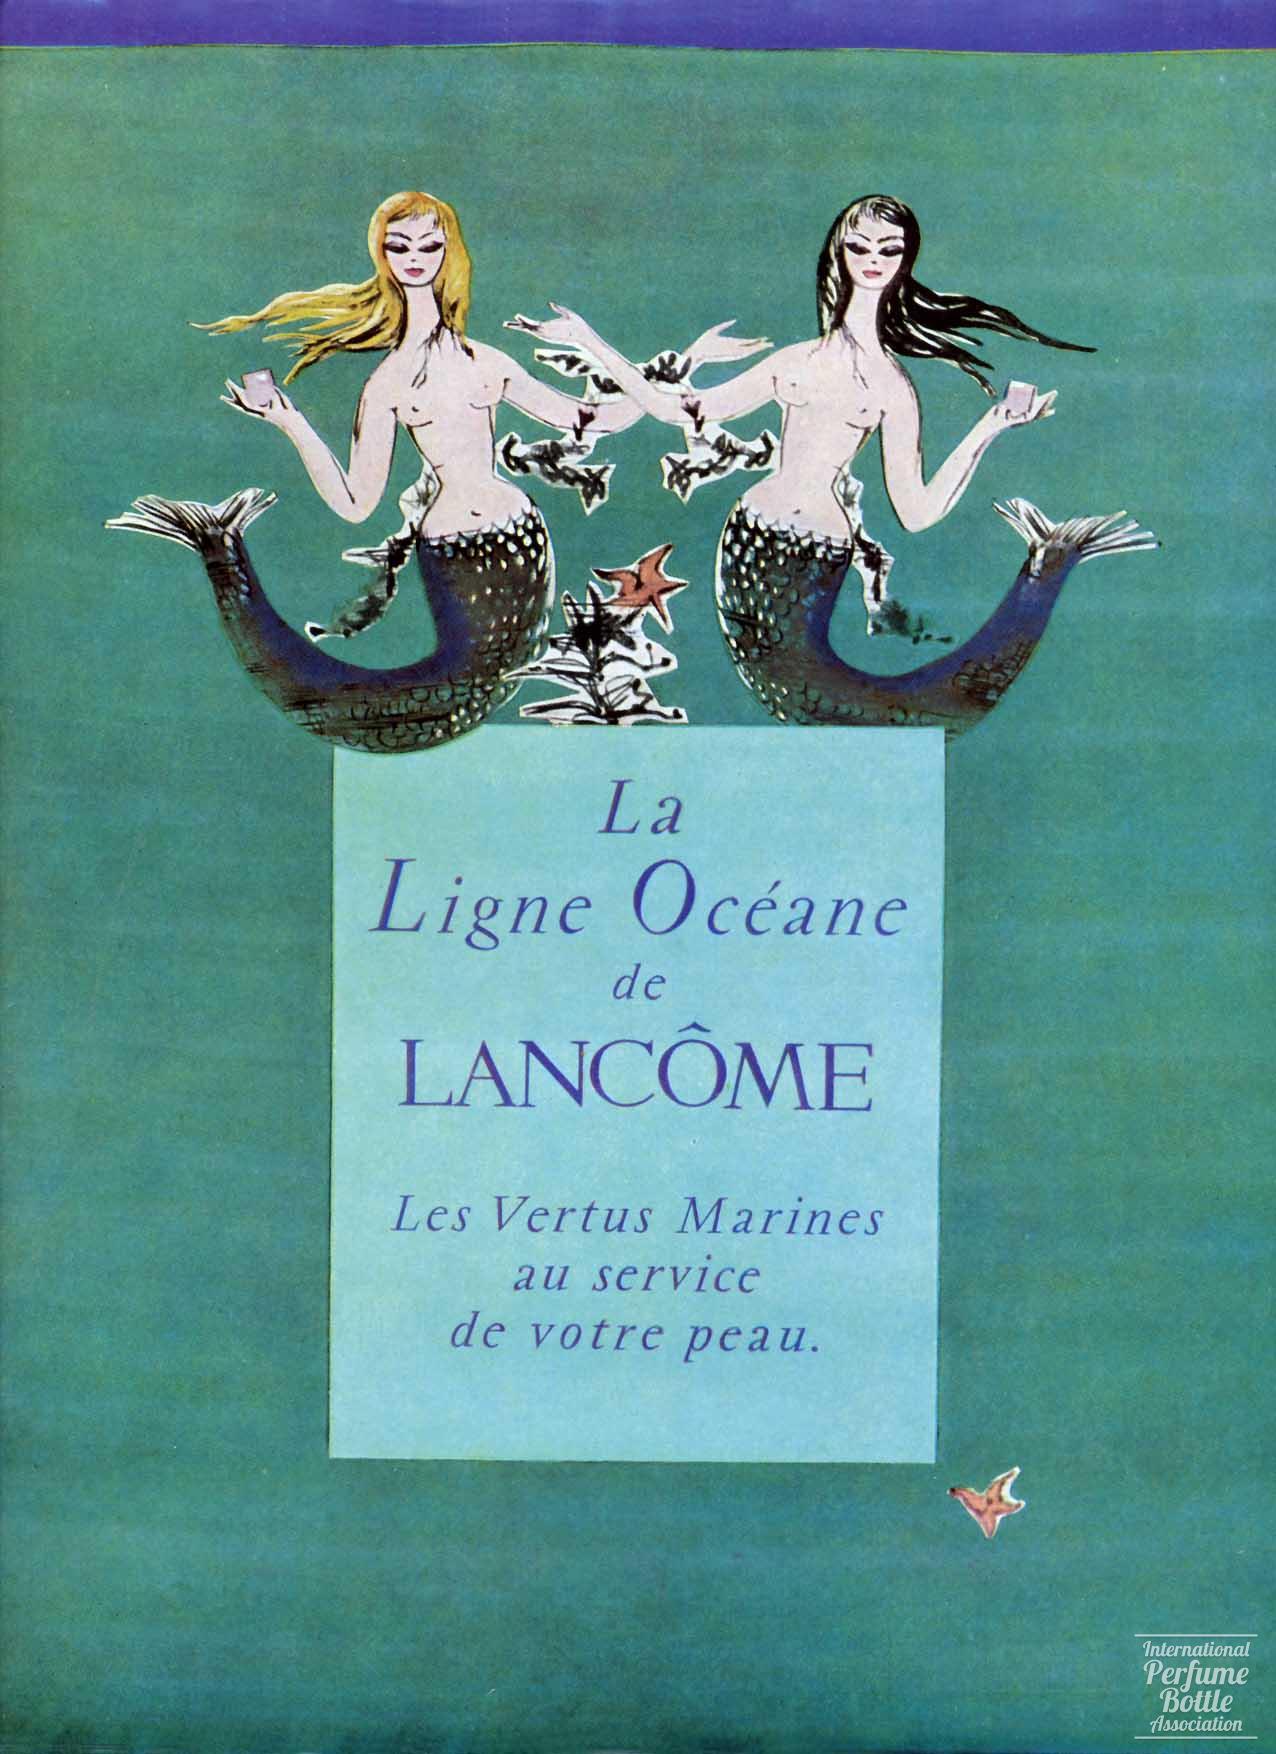 "La Ligne Oceane" by Lancôme Advertisement - 1956